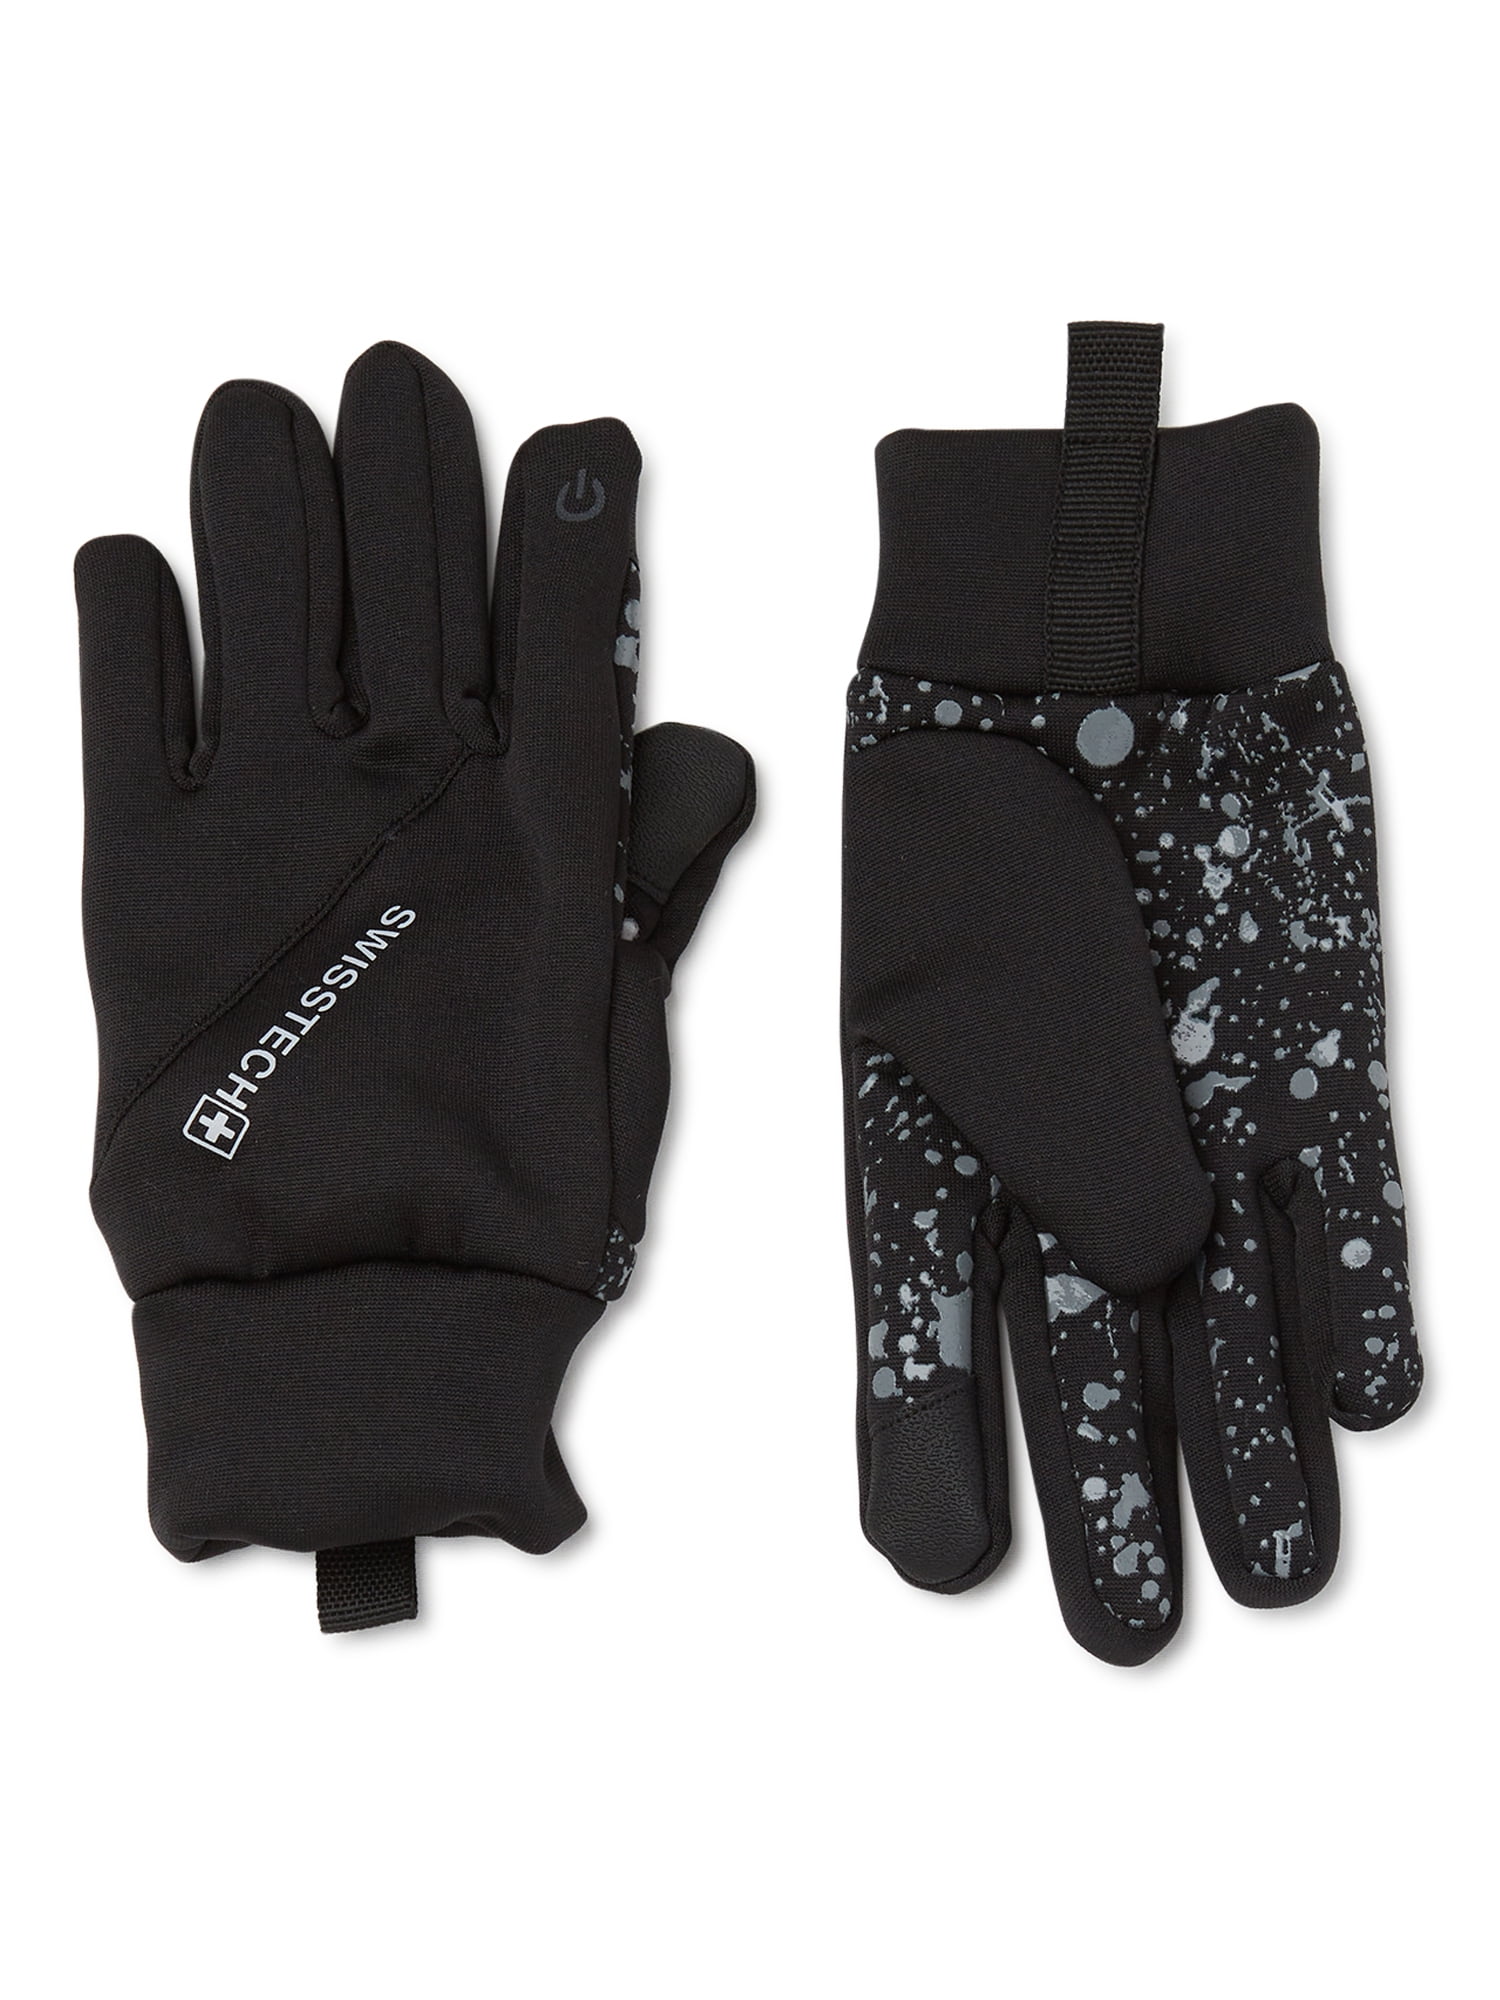 Swiss Tech Boys Tech Performance Gloves, Sizes S-XL